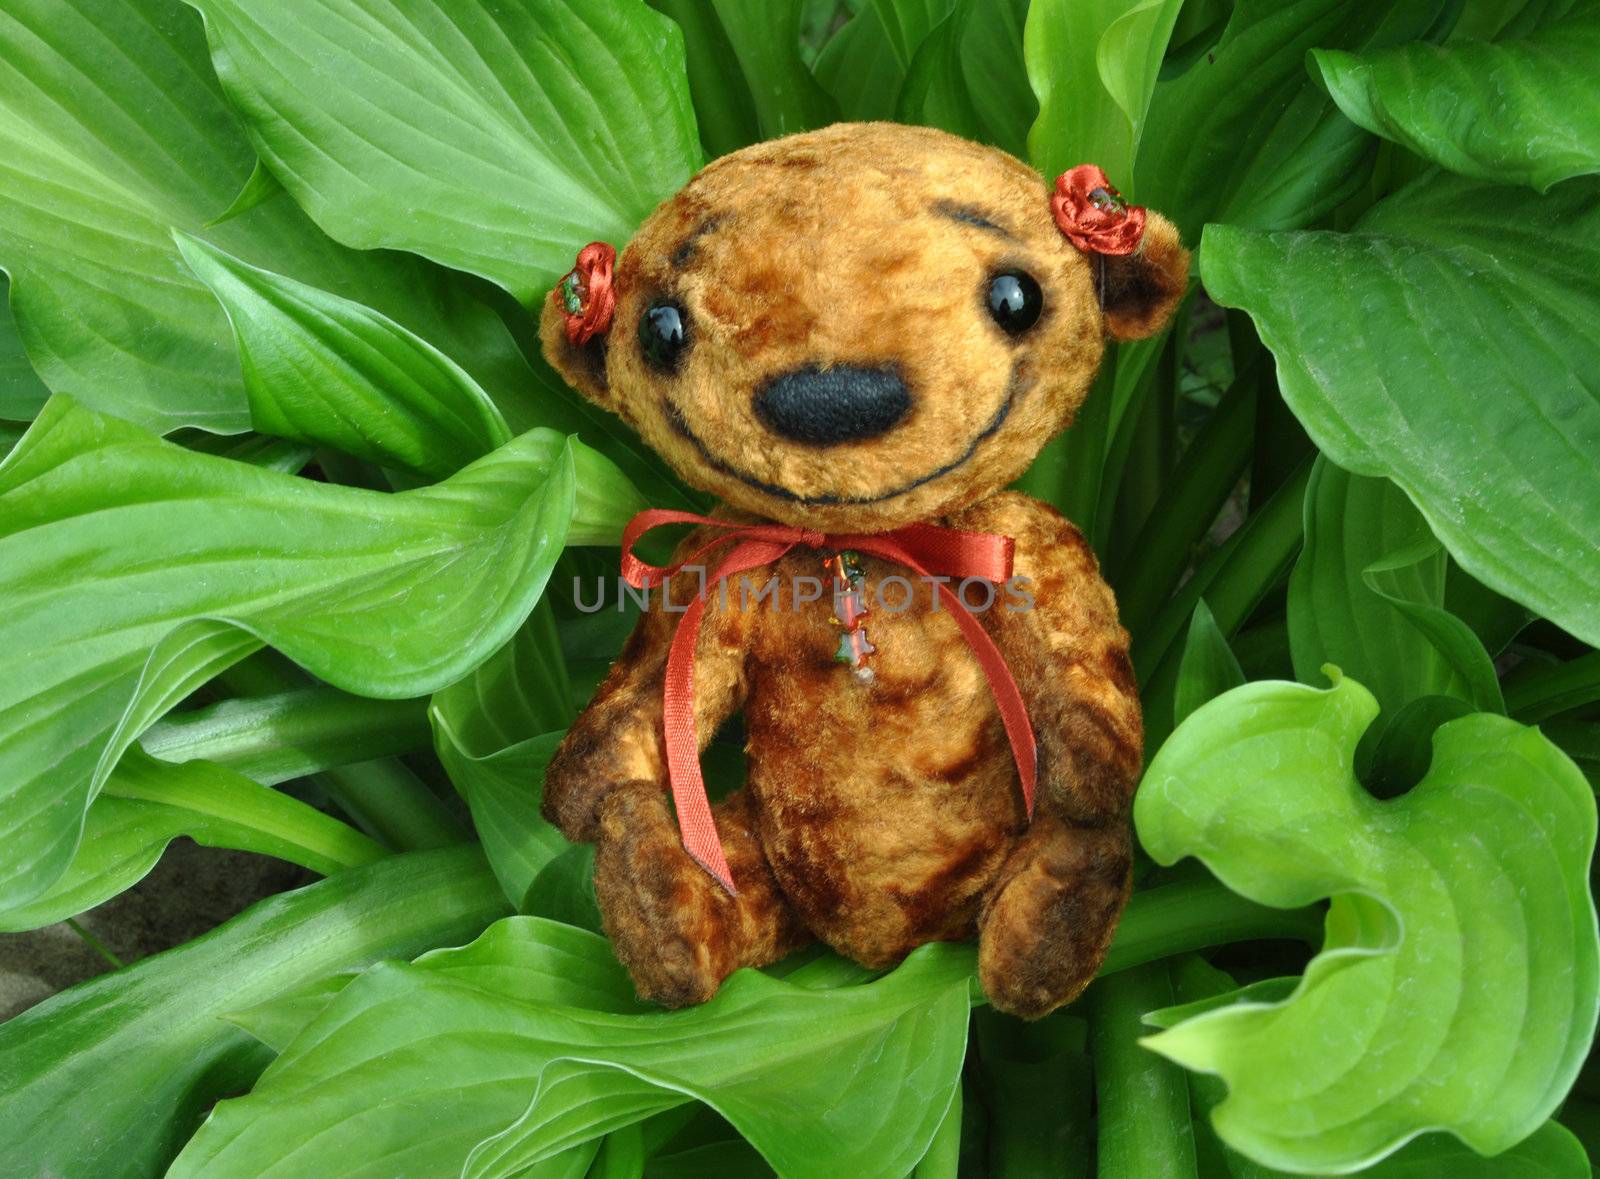 Handmade, the sewed plush toy: Teddy bear Niusia weirdo in green leaves of a flower Hosta